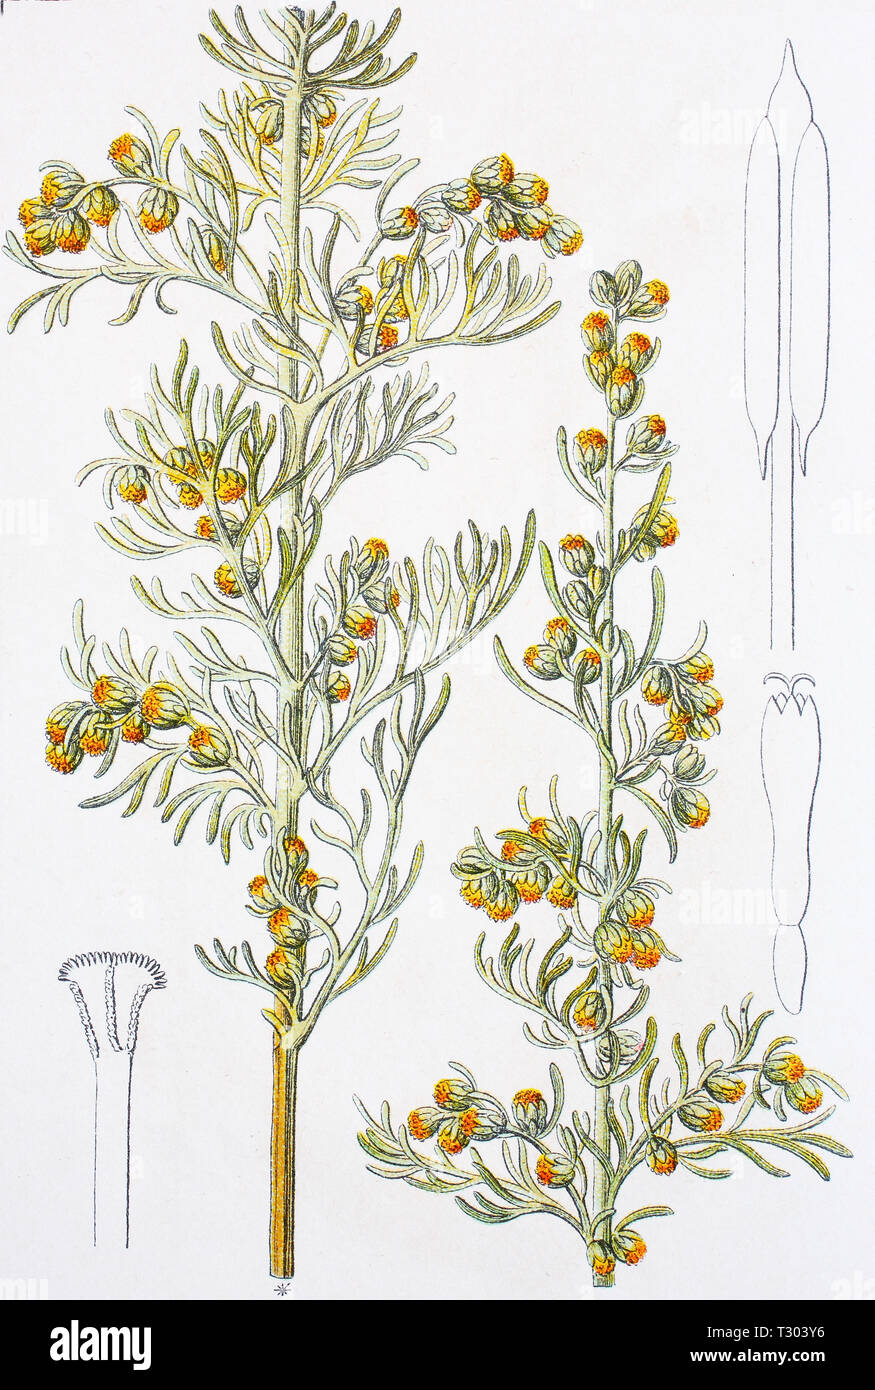 Digital improved reproduction of an illustration of, Küstenbeifuß, Küsten-Beifuß, Artemisia maritima, sea wormwood, from an original print of the 19th century Stock Photo